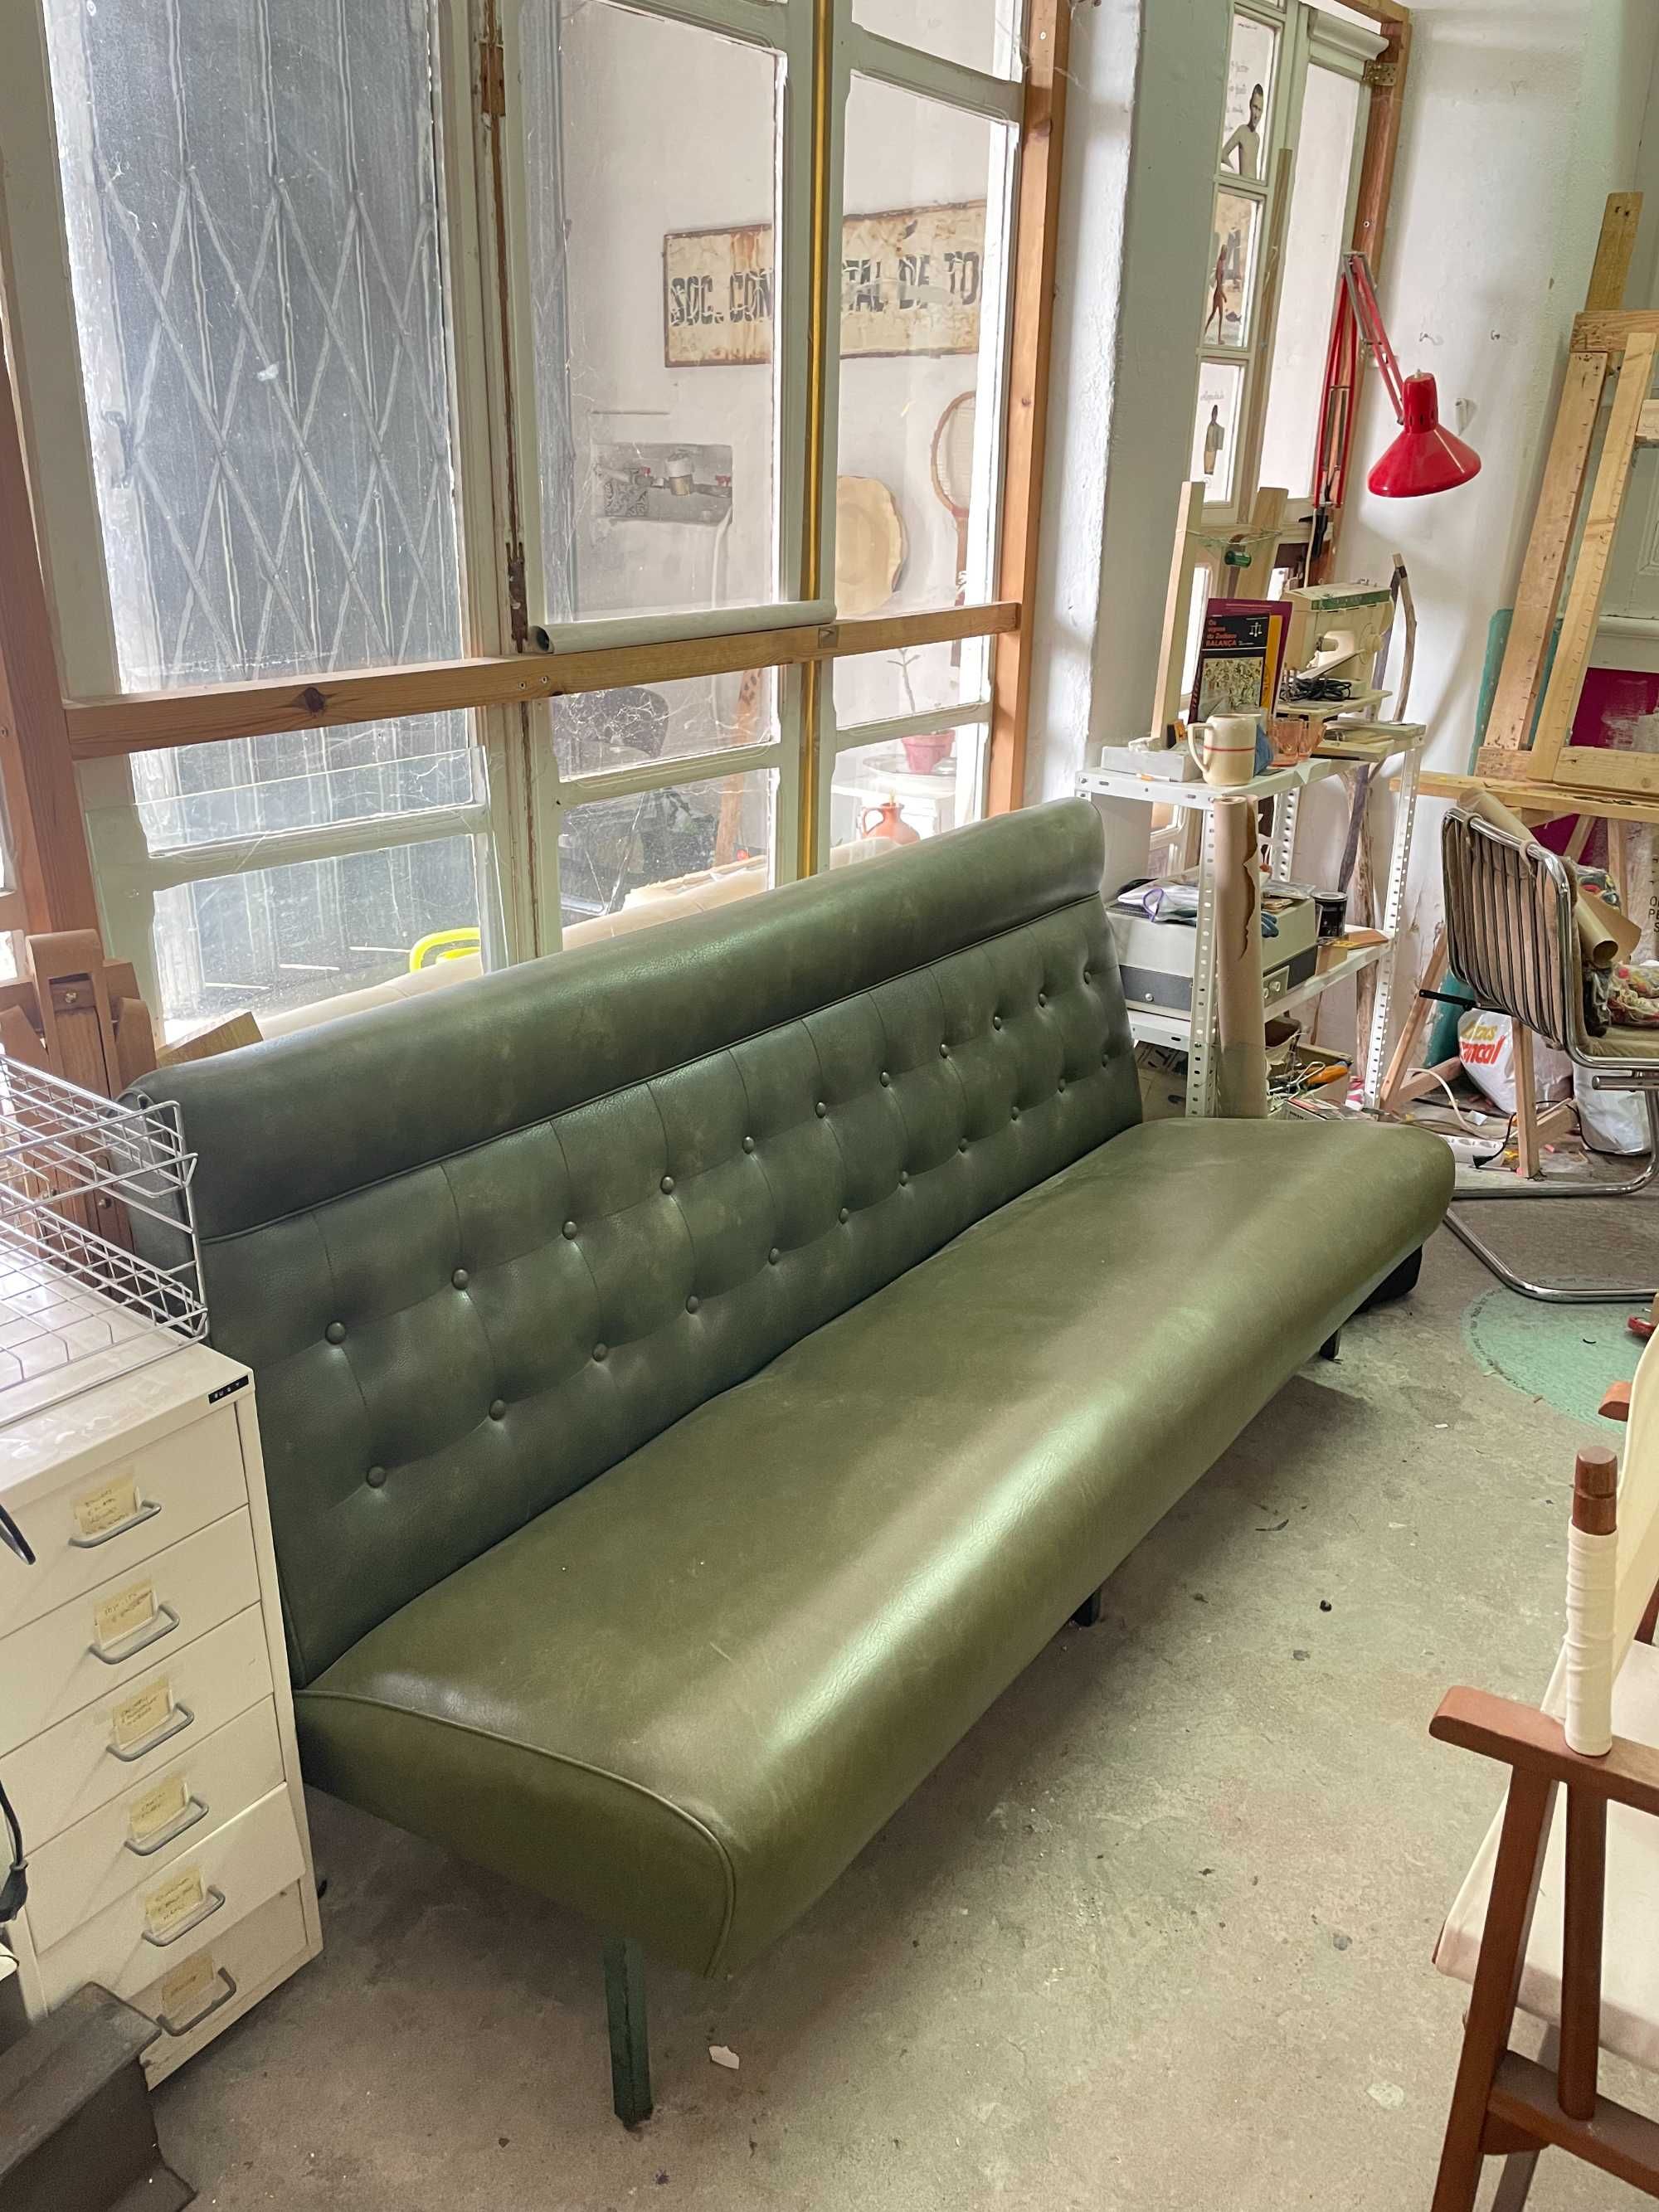 Sofa vintage verde